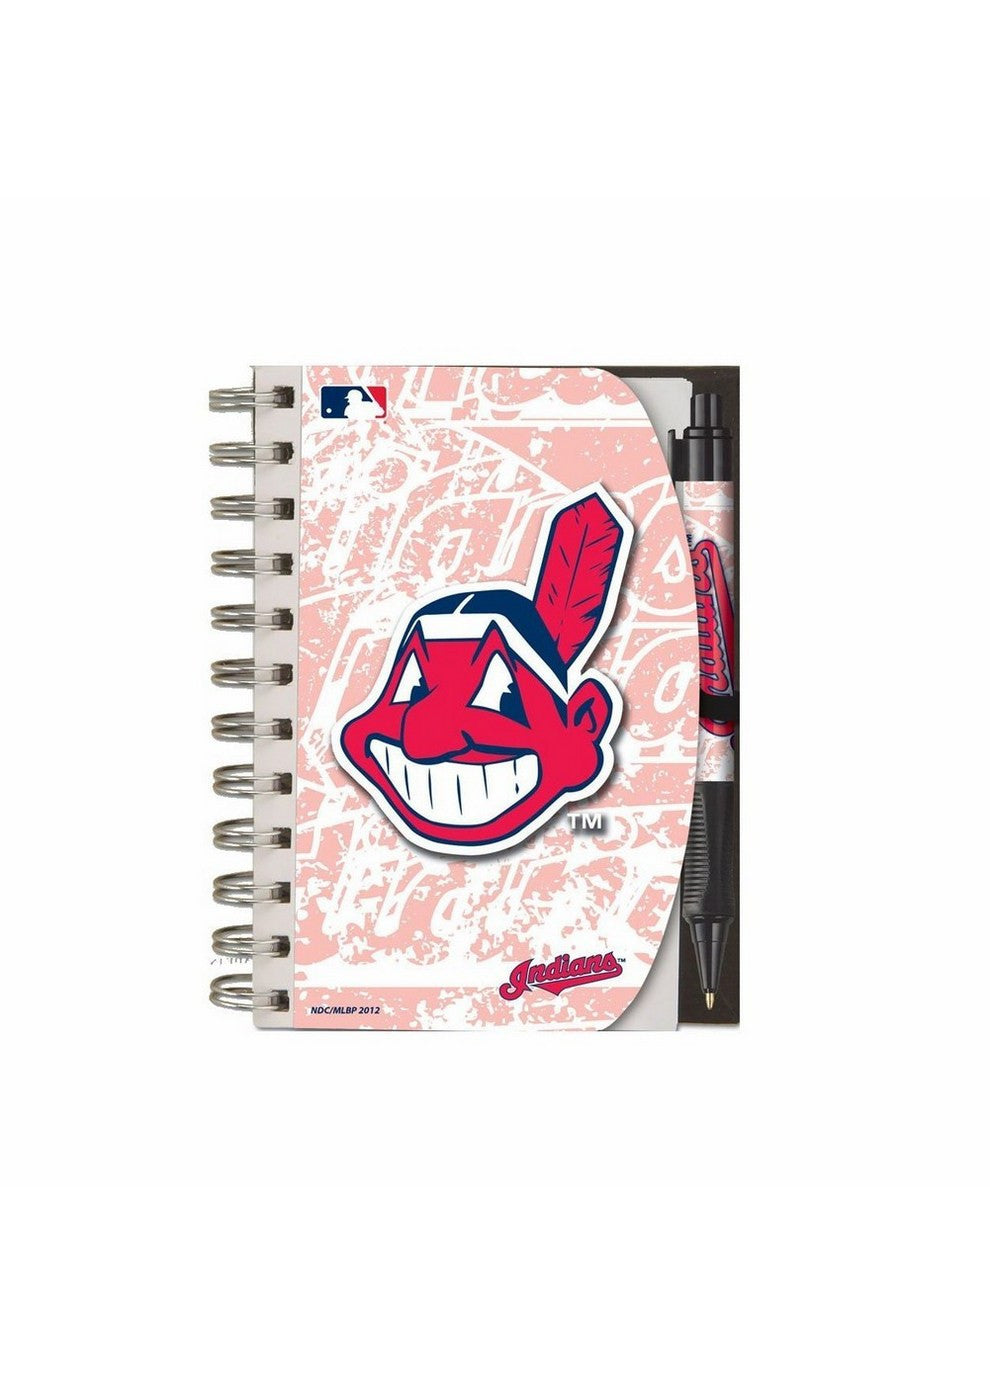 Deluxe Hardcover 4x6 Notebook & Pen Set (grip) - Cleveland Indians